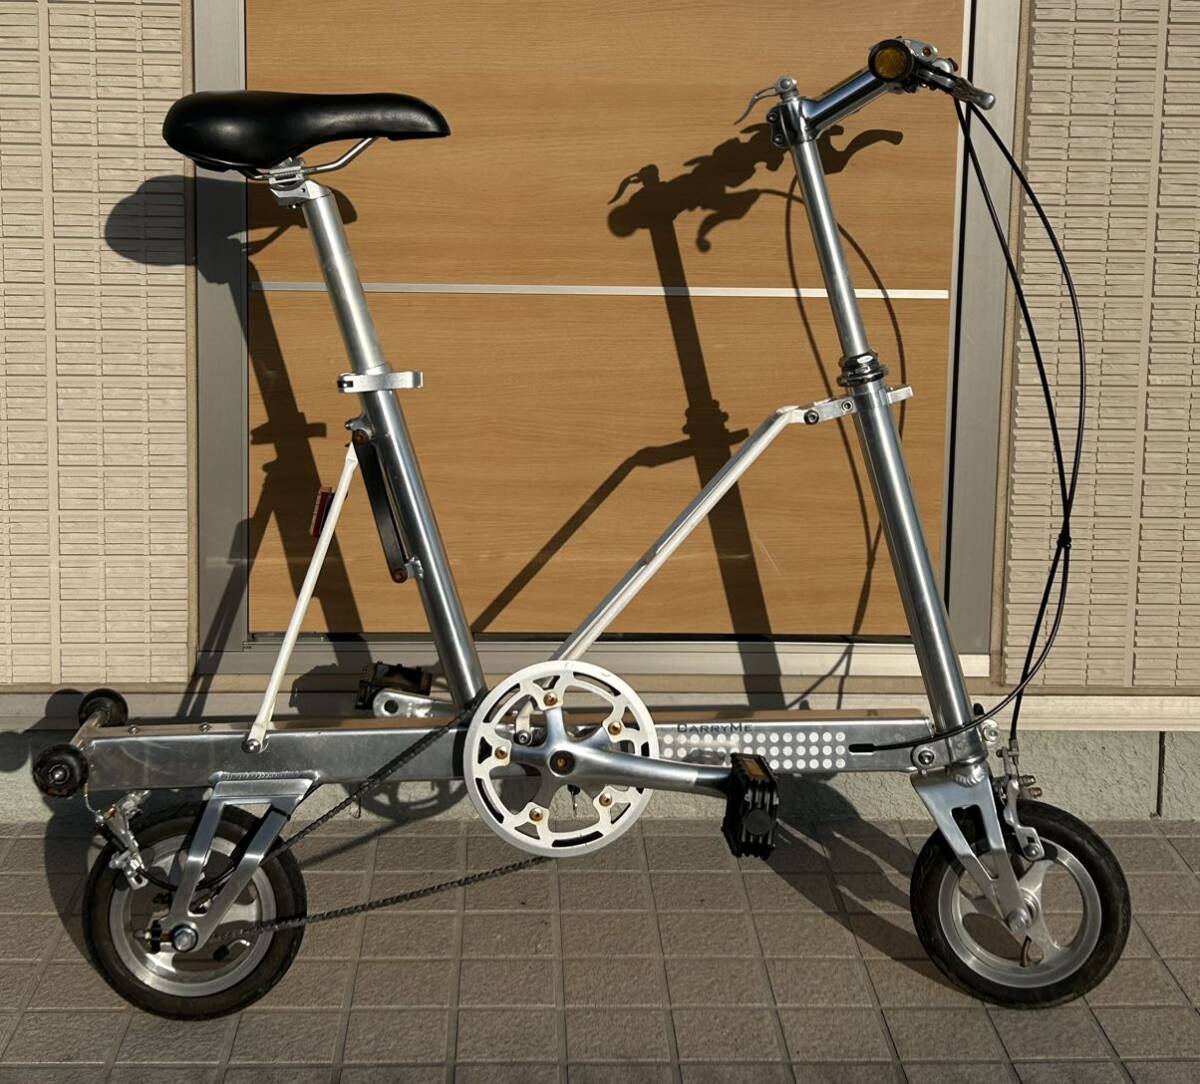 CarryMe ミニベロ 折り畳み自転車 キャリーミー パシフィック PACIFIC 折りたたみ自転車 小径車 輪行 CARRY ME シルバー アルミ 旅行の画像1